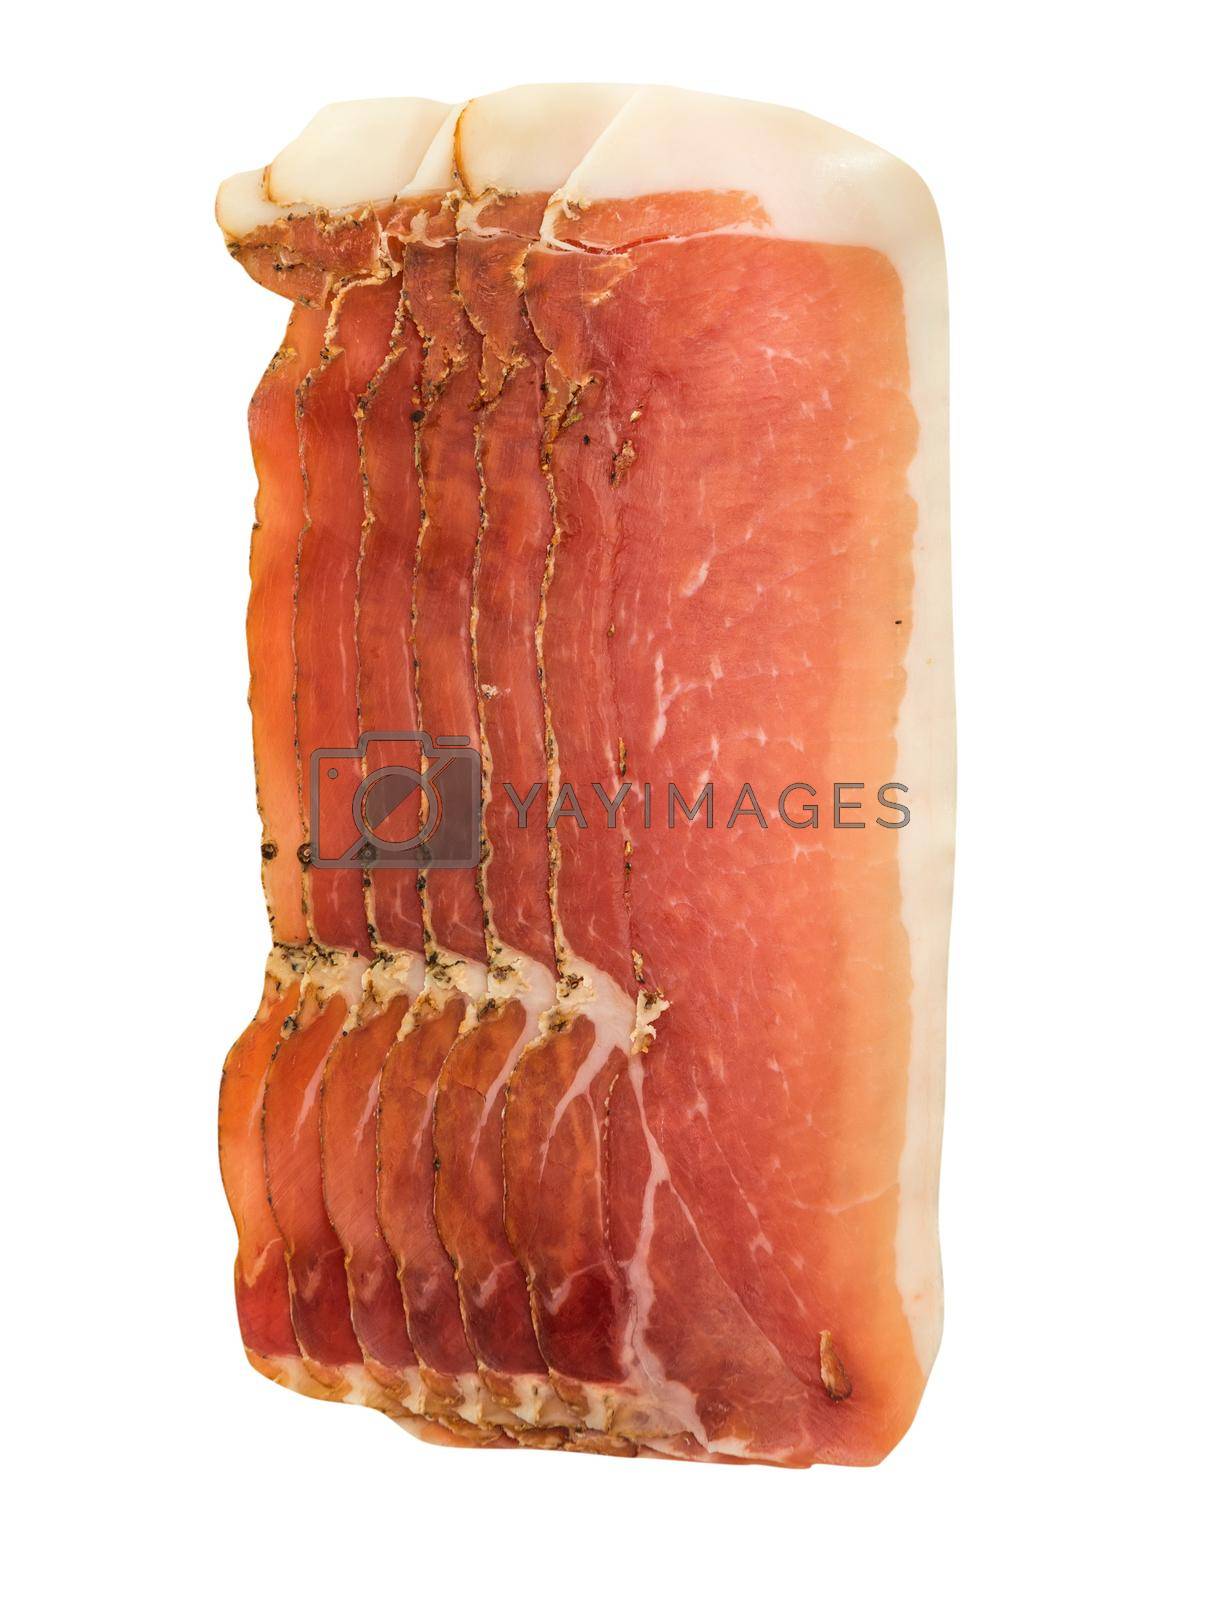 Royalty free image of platter of spanish cured pork ham jamon by tan4ikk1